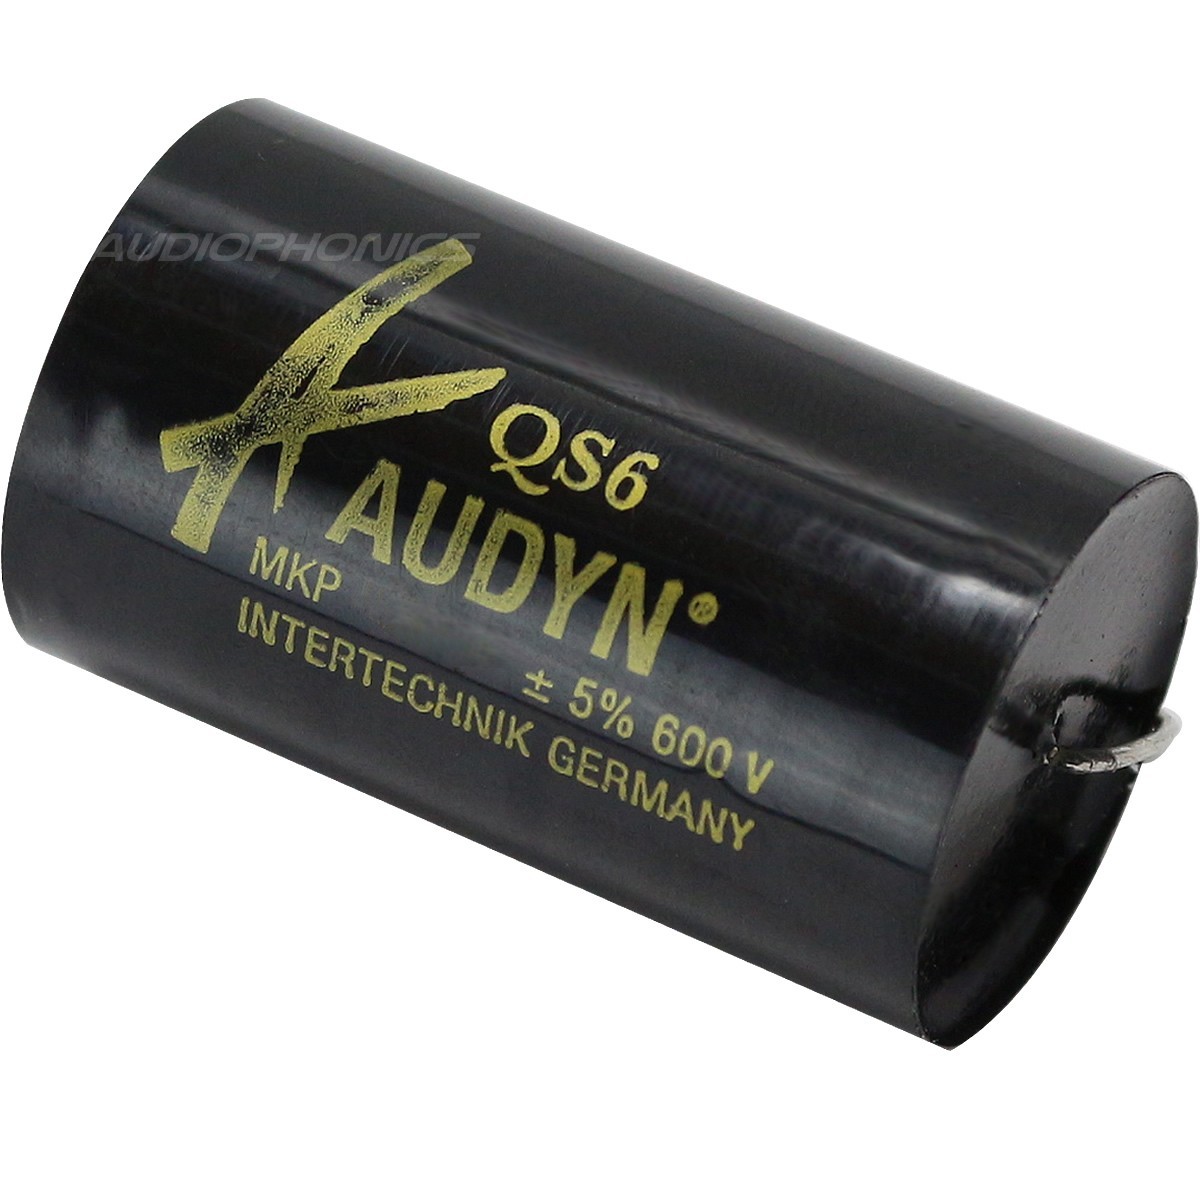 AUDYN CAP QS6 MKP Capacitor 600V 10μF